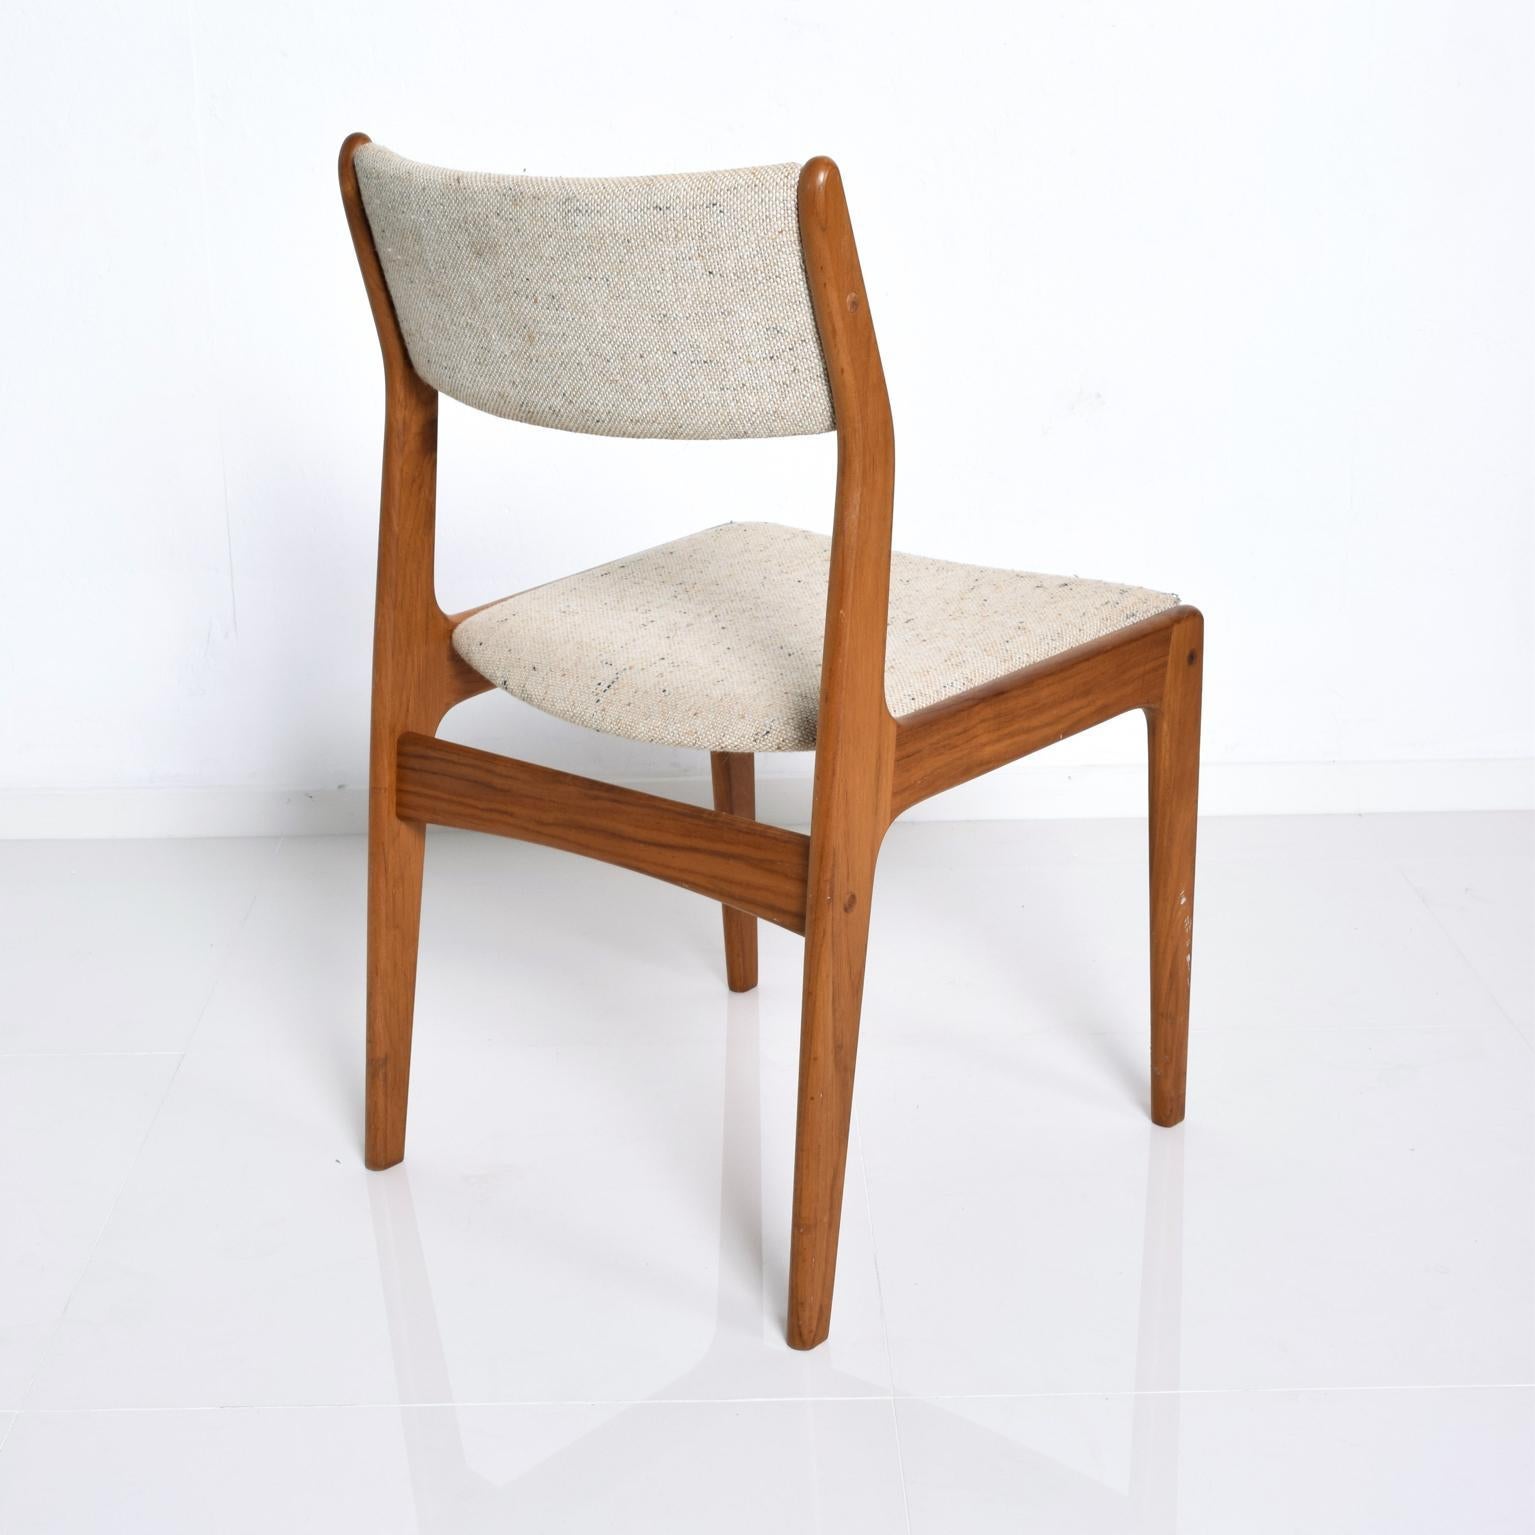 Midcentury Danish Modern Benny Linden Teak Dining Chairs, Set of 4 1